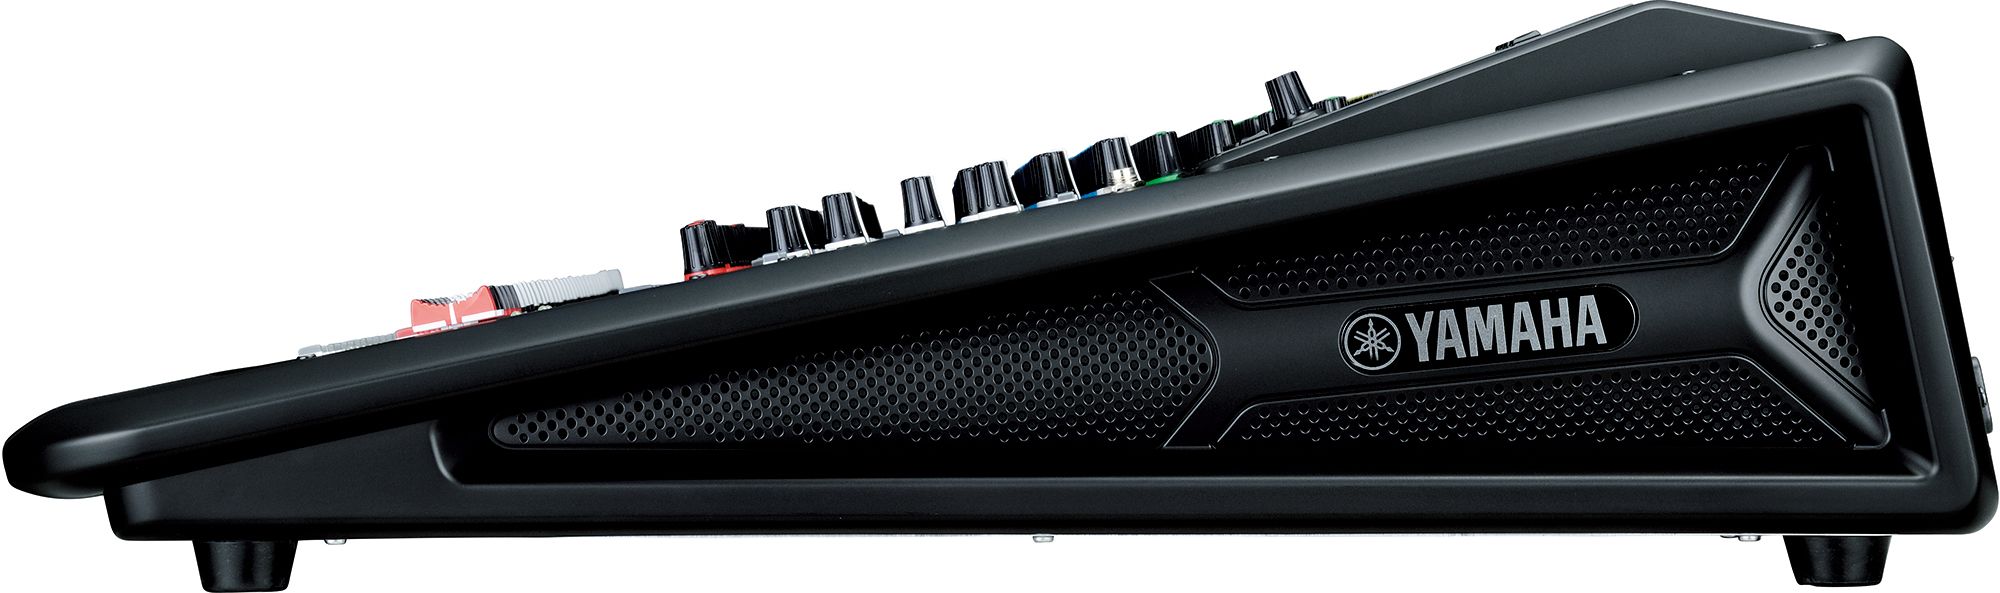 Yamaha MGP32X 32-Channel Premium Mixing Console - Each